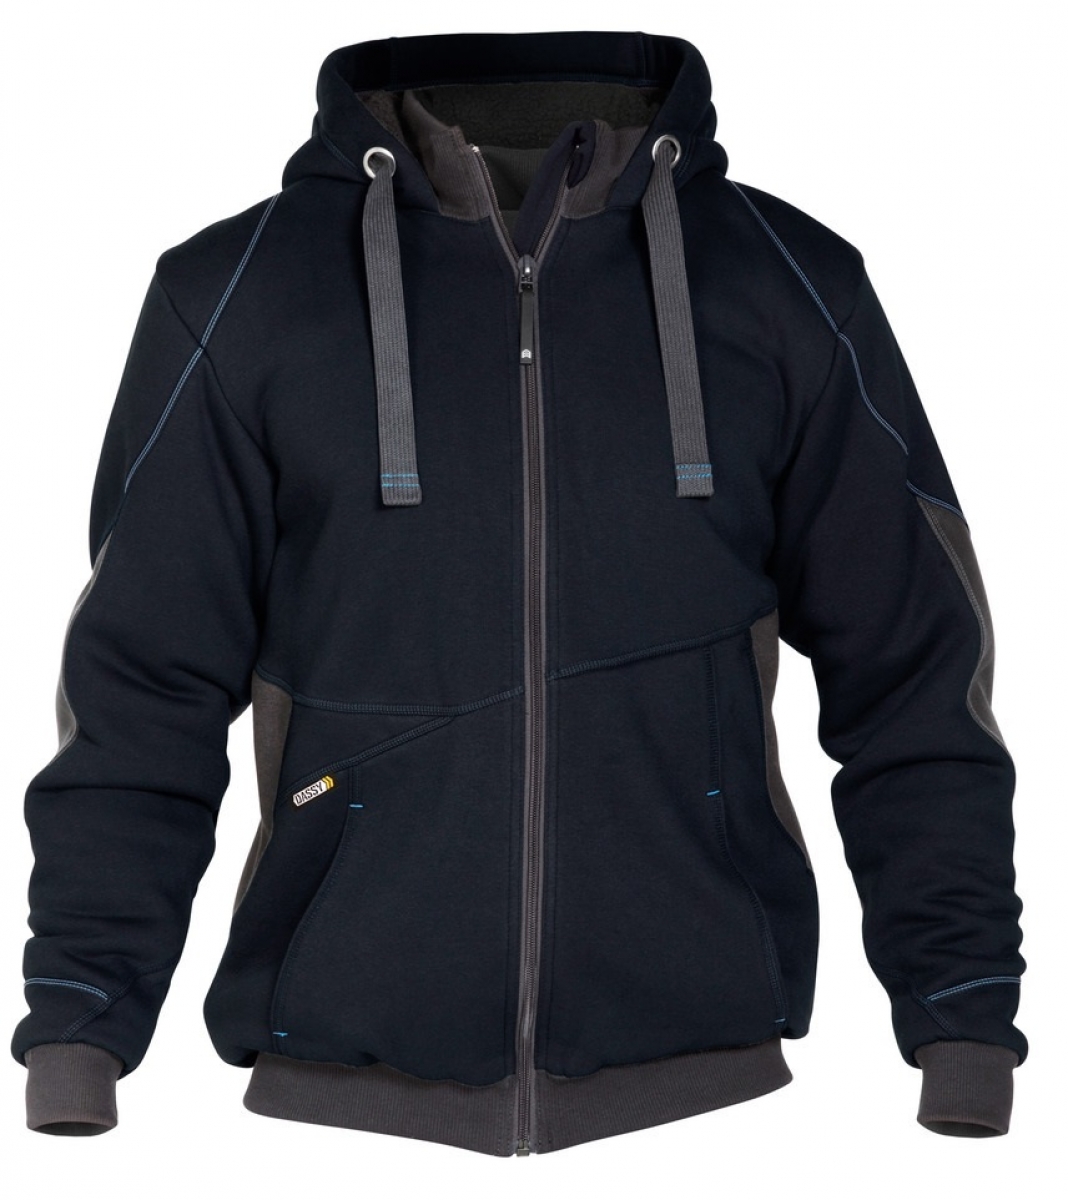 DASSY-Workwear, Sweatshirt-Jacke "PULSE", dunkelblau/grau